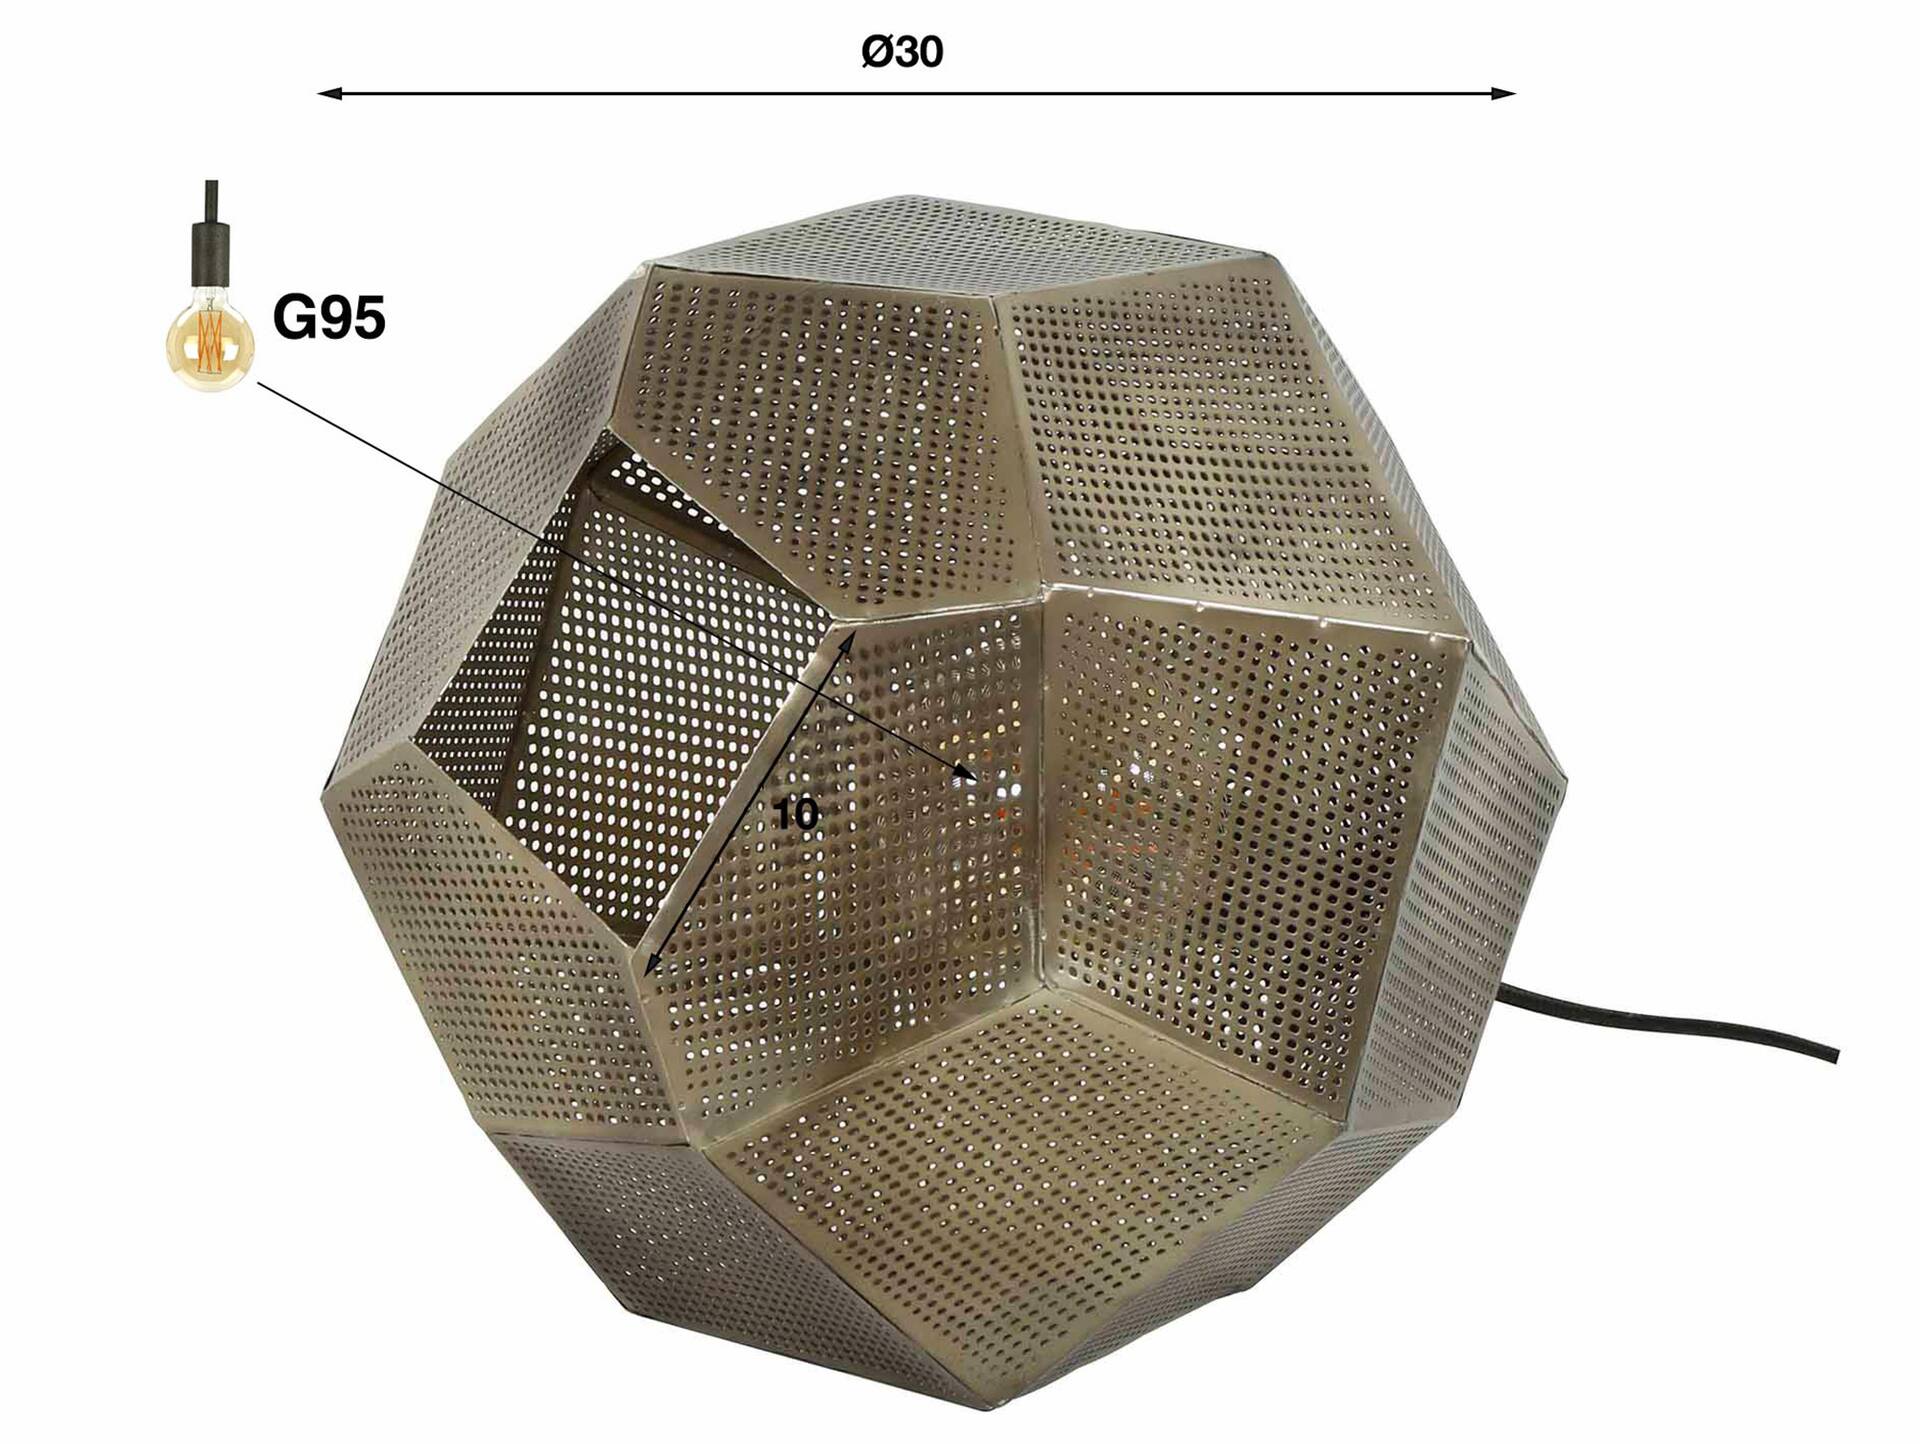 SHILO Tischlampe, Hexagon, Metall Kupferfarbig 